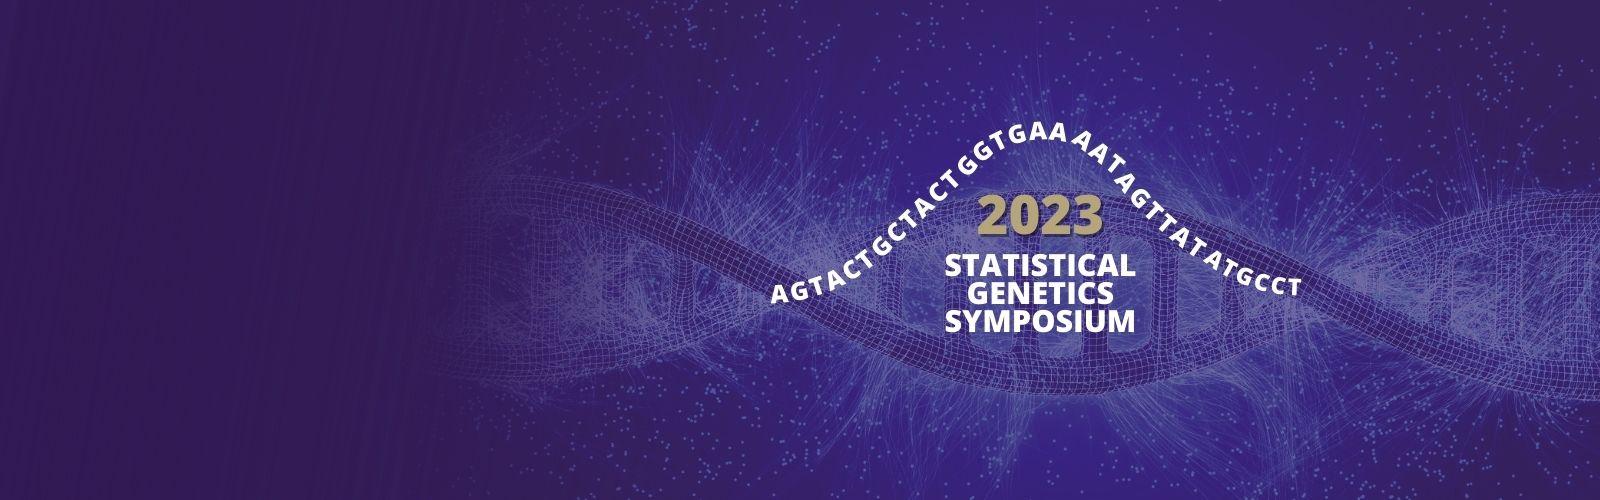 2023 Statistical Genetics Symposium logo